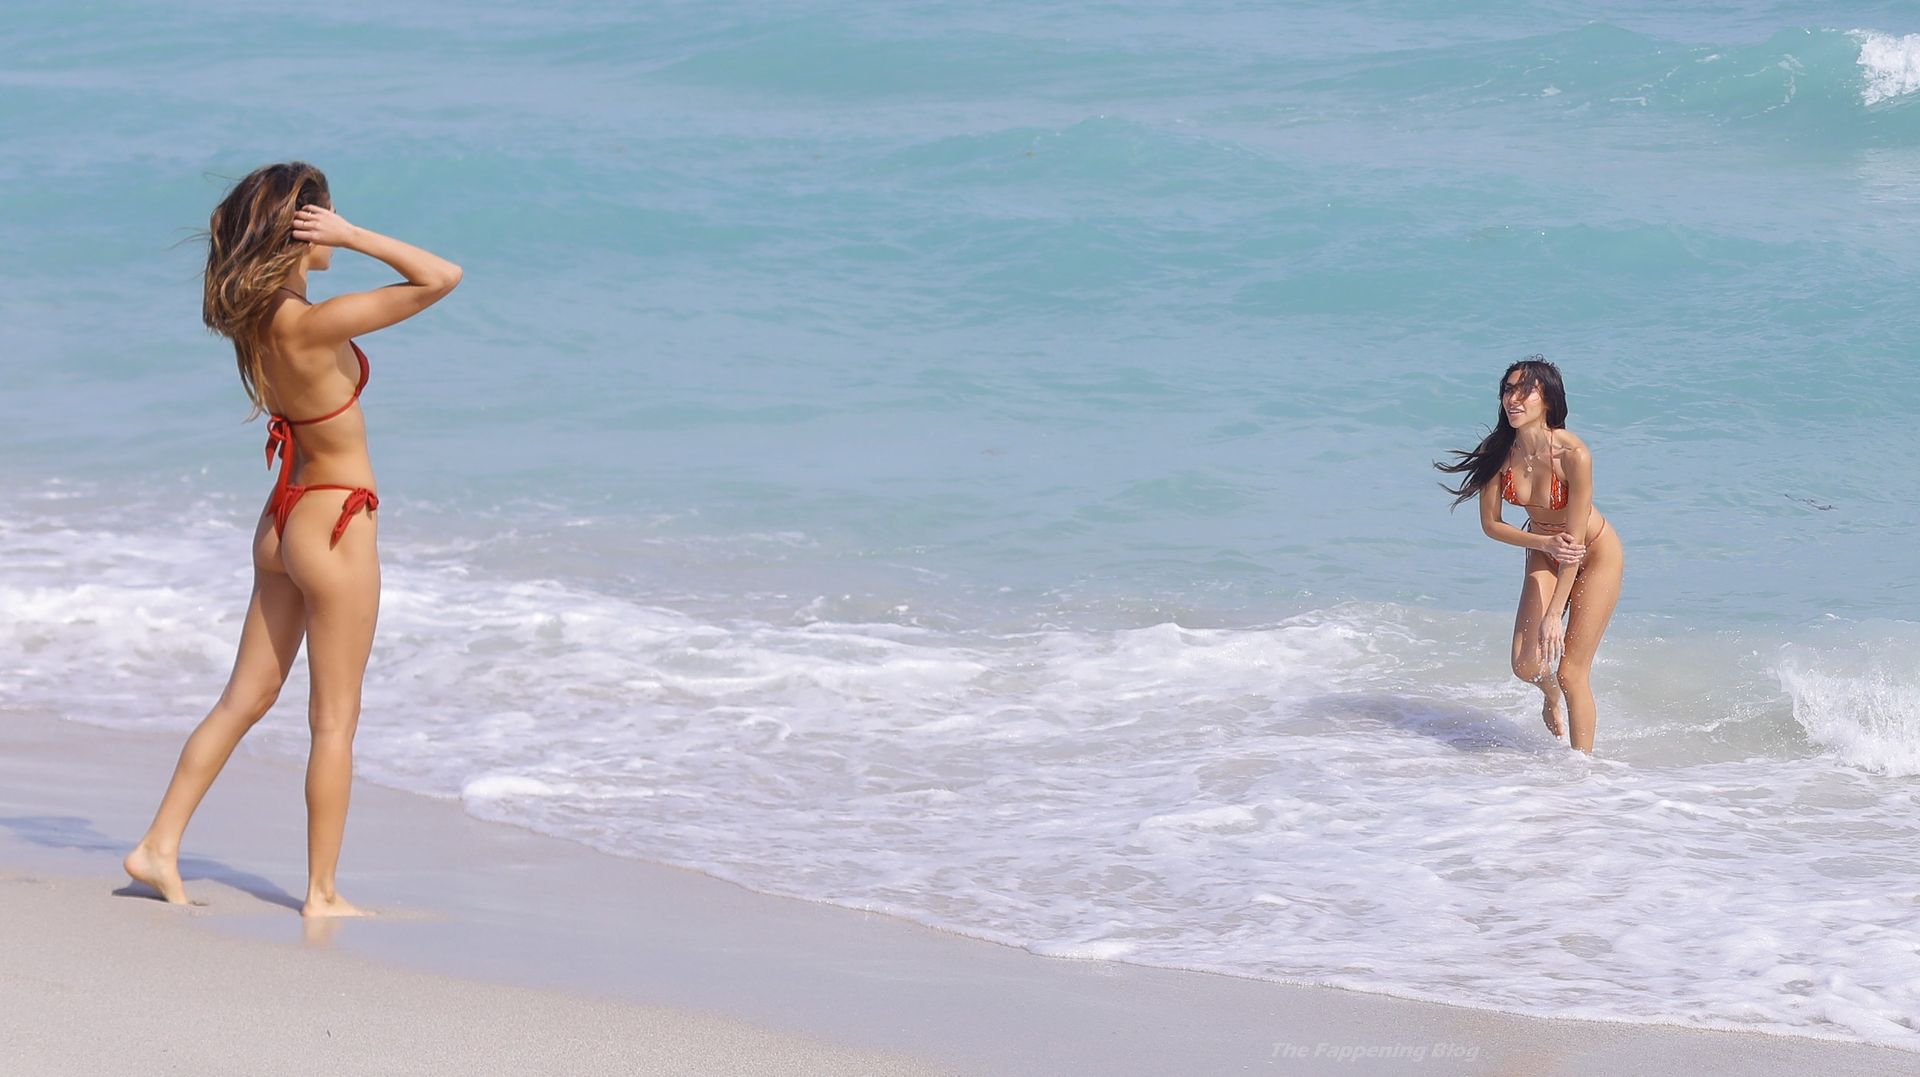 Chantel Jeffries Turns Heads of Beachgoers on the Beach in Miami (83 Photos)